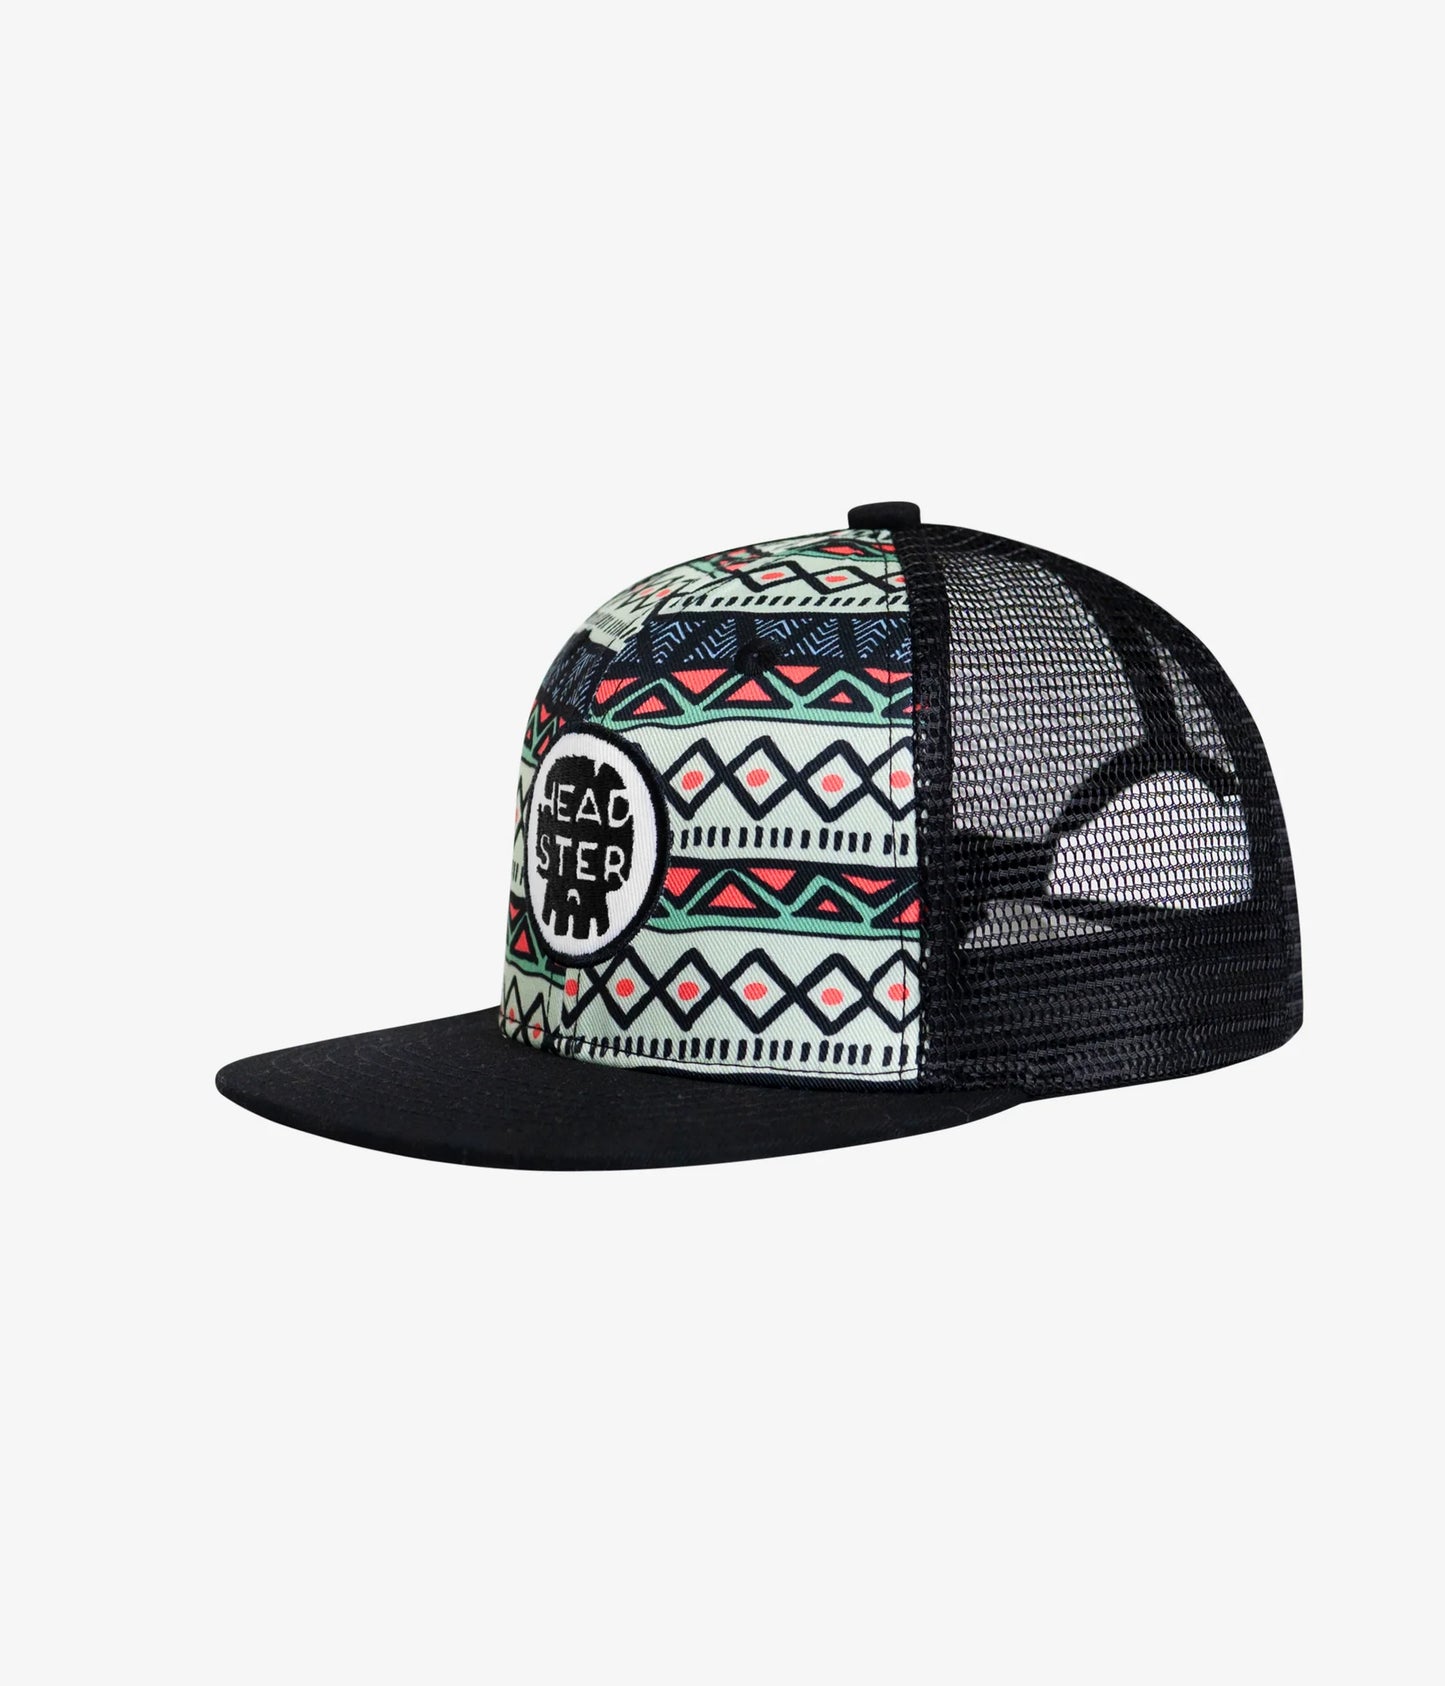 Hat (Snapback) - Azteca Black